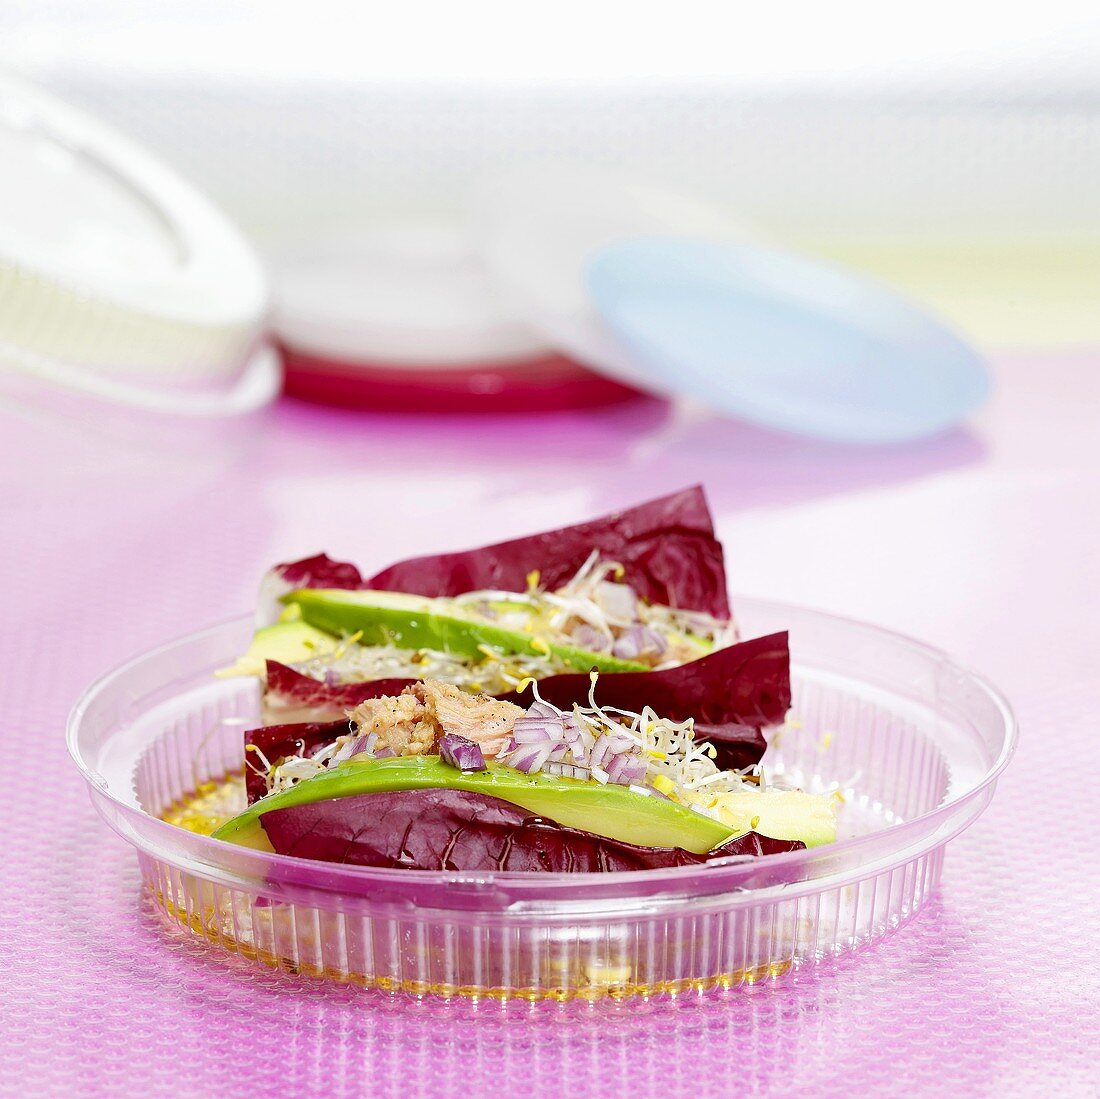 Radicchio salad with tuna and avocado in plastic box